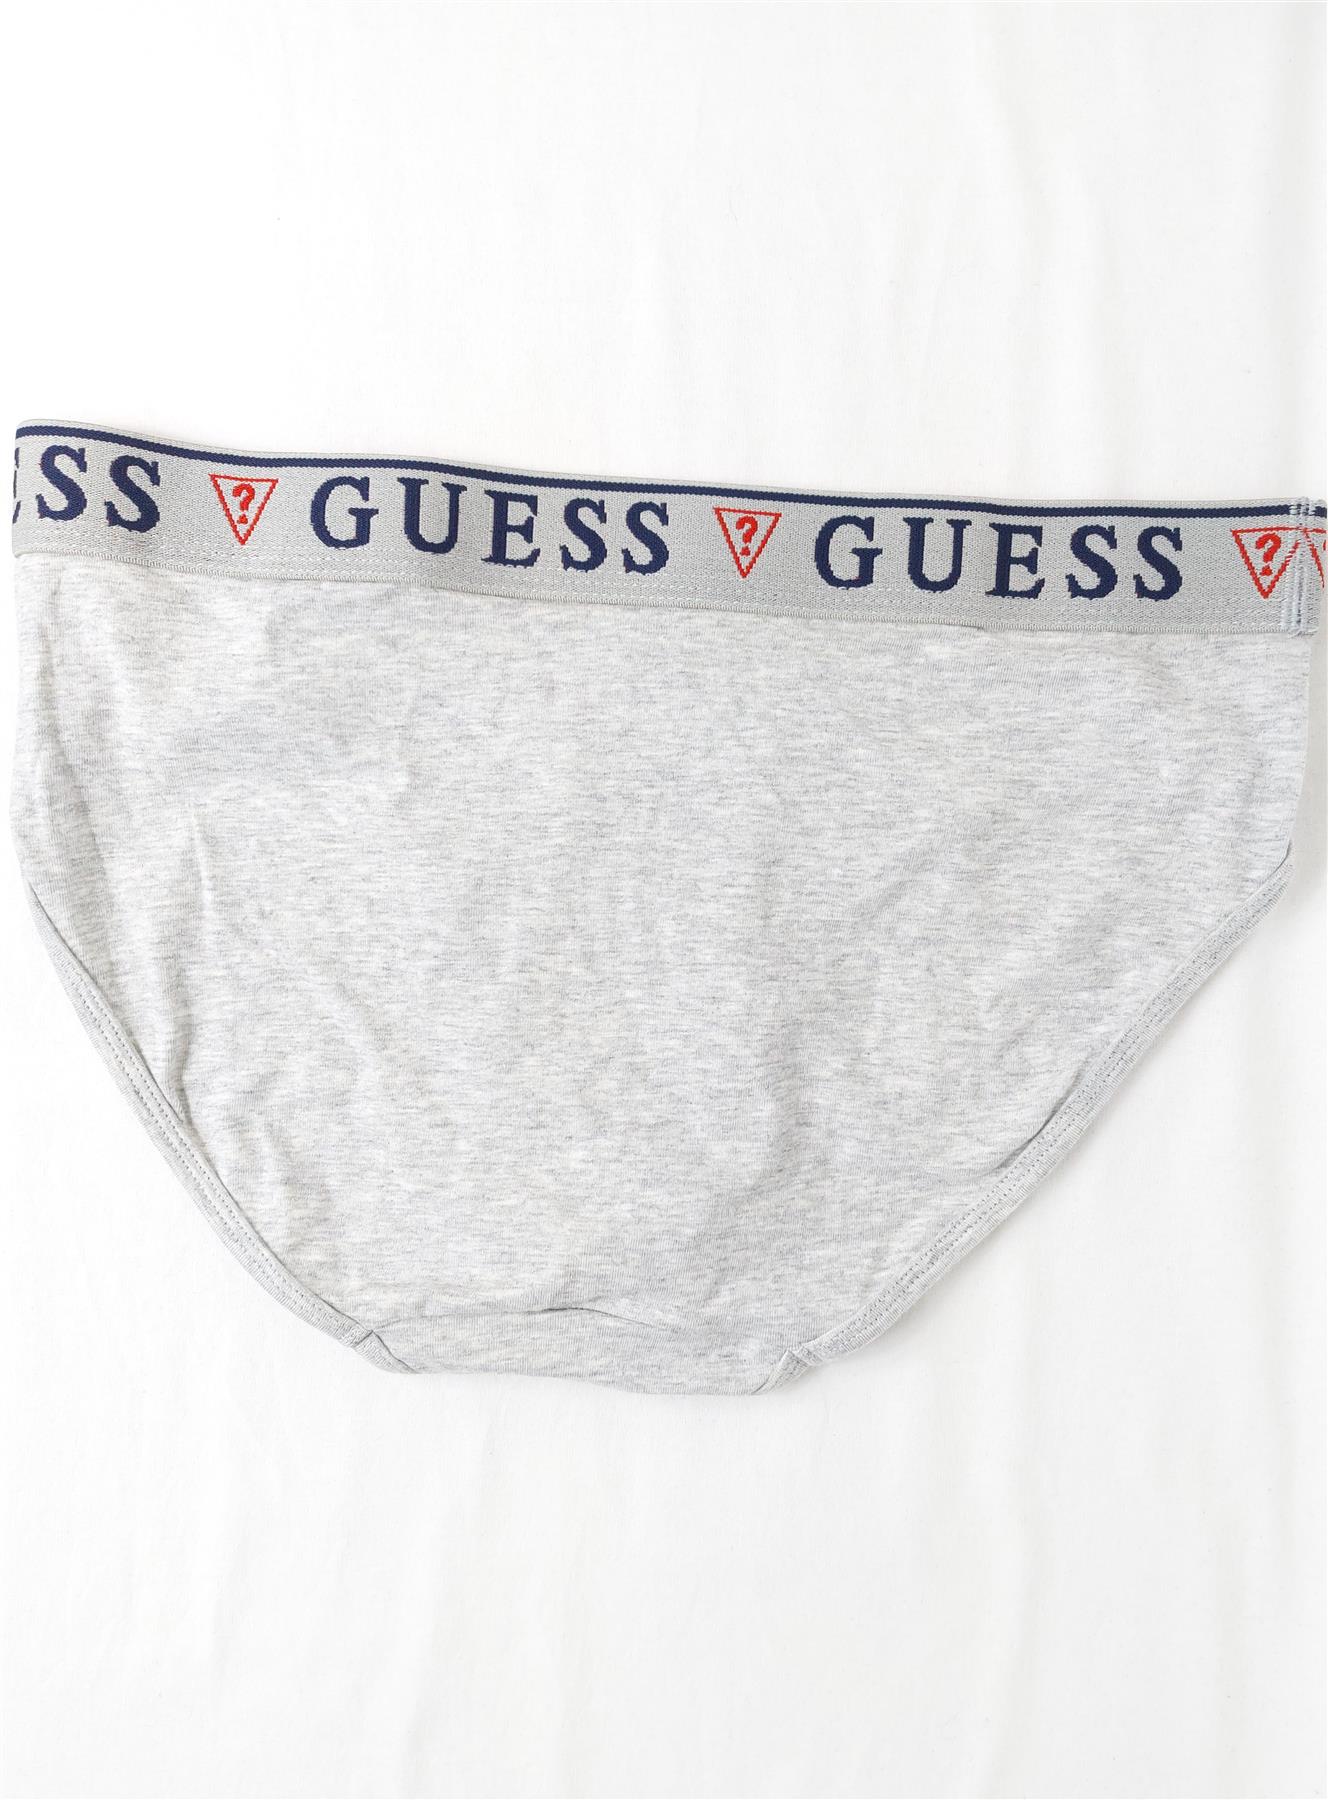 Guess Men's Briefs Underpants Designer Cotton Rich Jersey Elasticated Logo Band